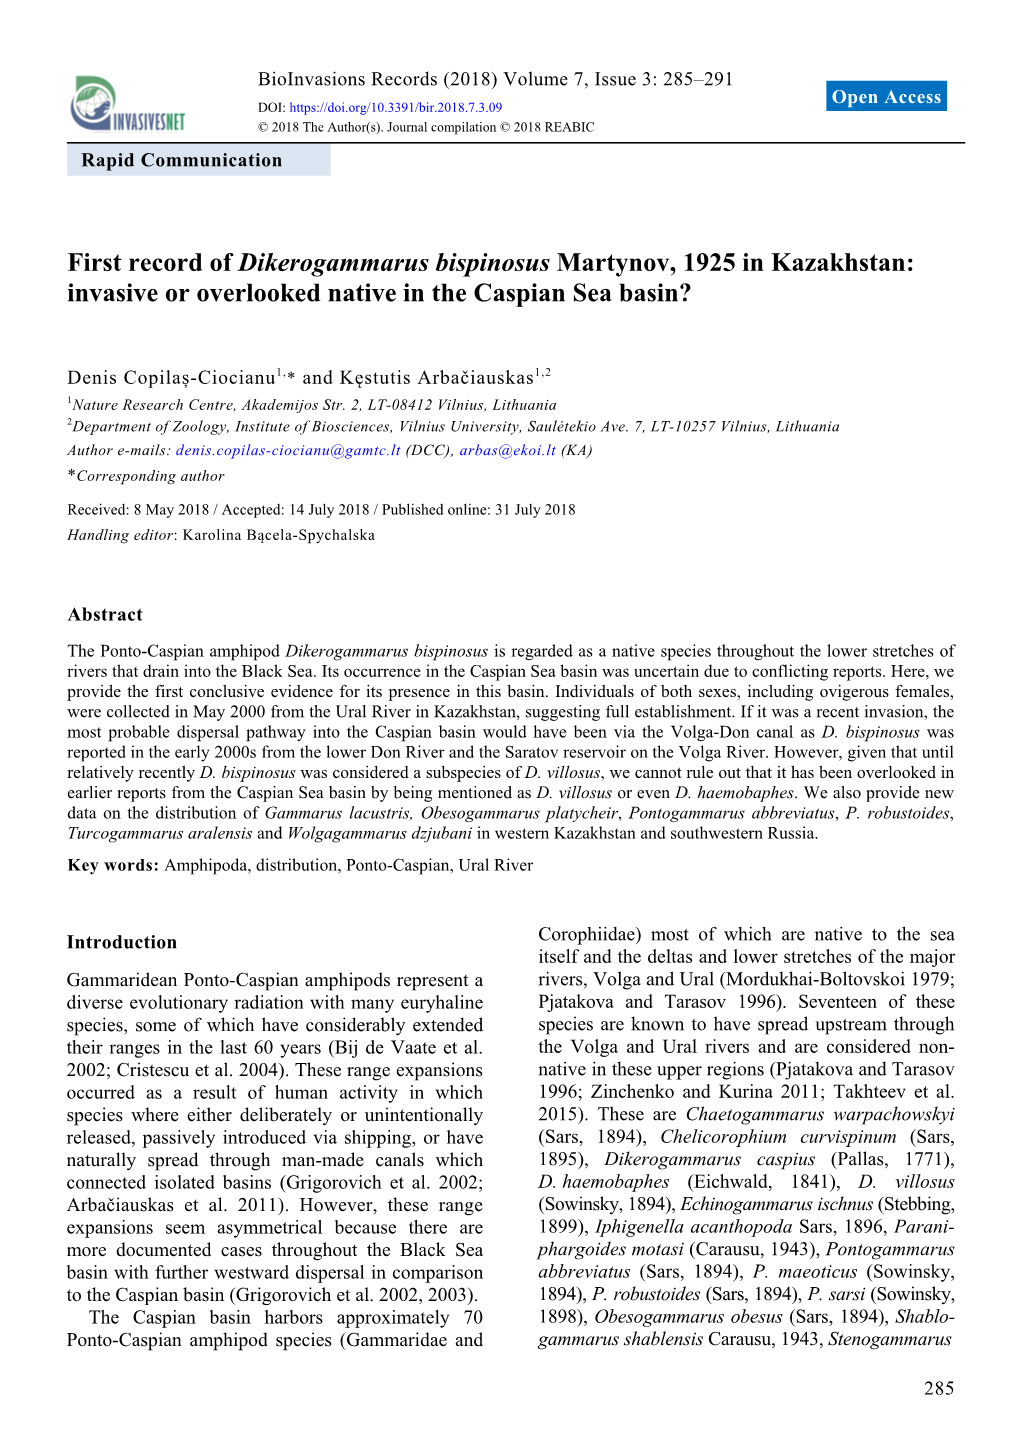 First Record of Dikerogammarus Bispinosus Martynov, 1925 in Kazakhstan: Invasive Or Overlooked Native in the Caspian Sea Basin?